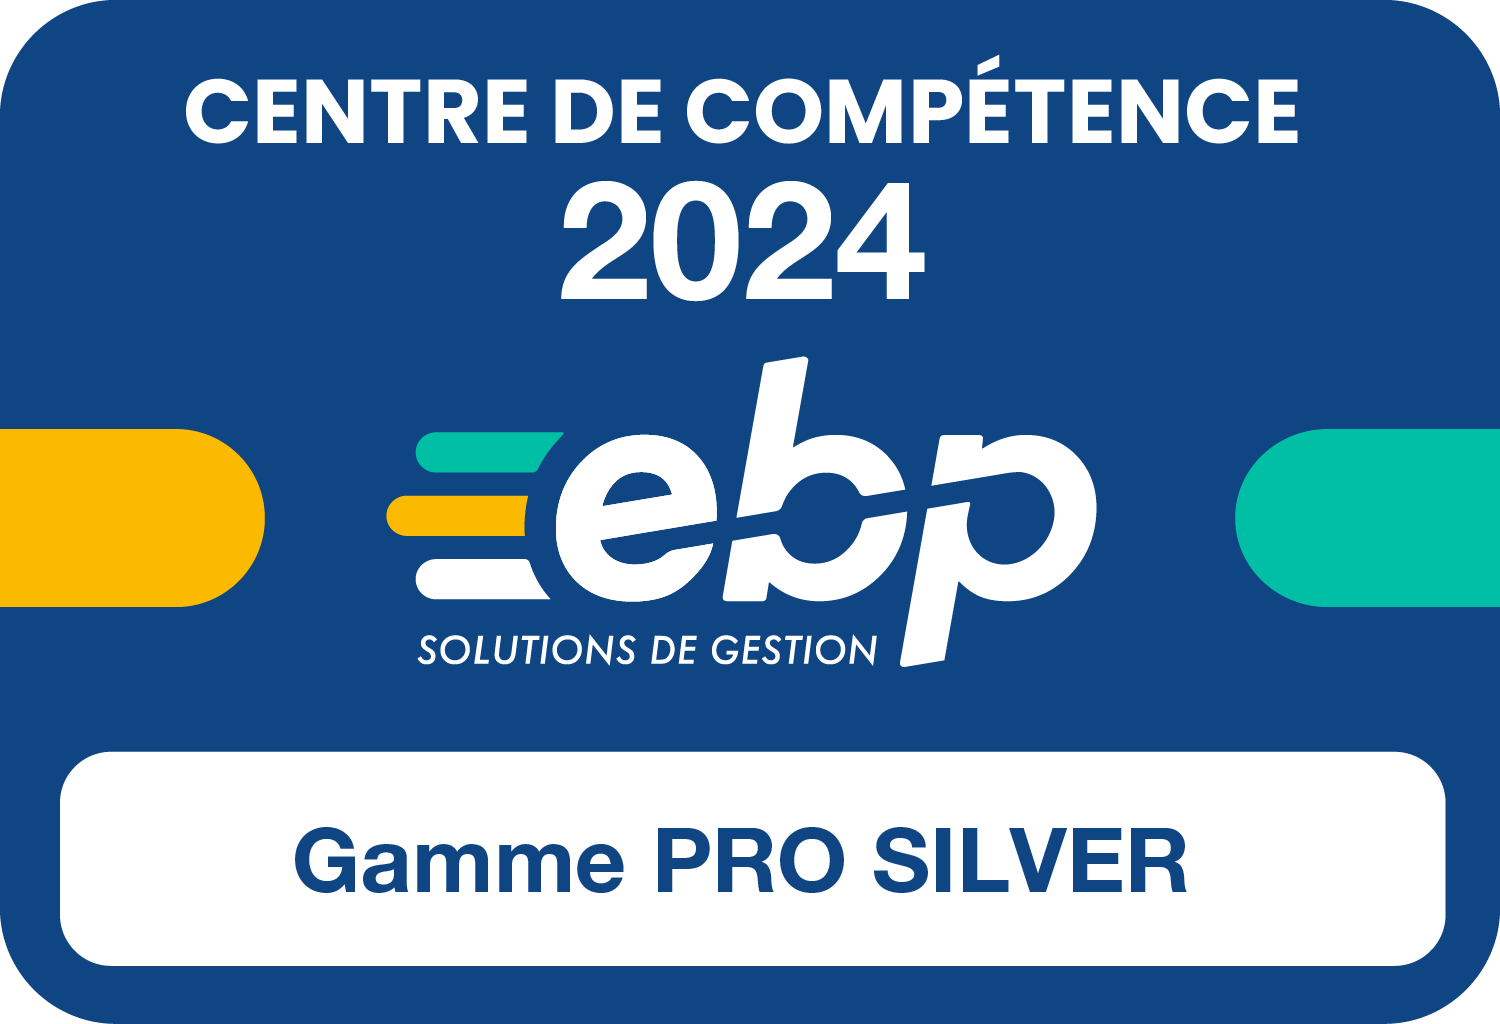 EBP Gamme Pro Silver